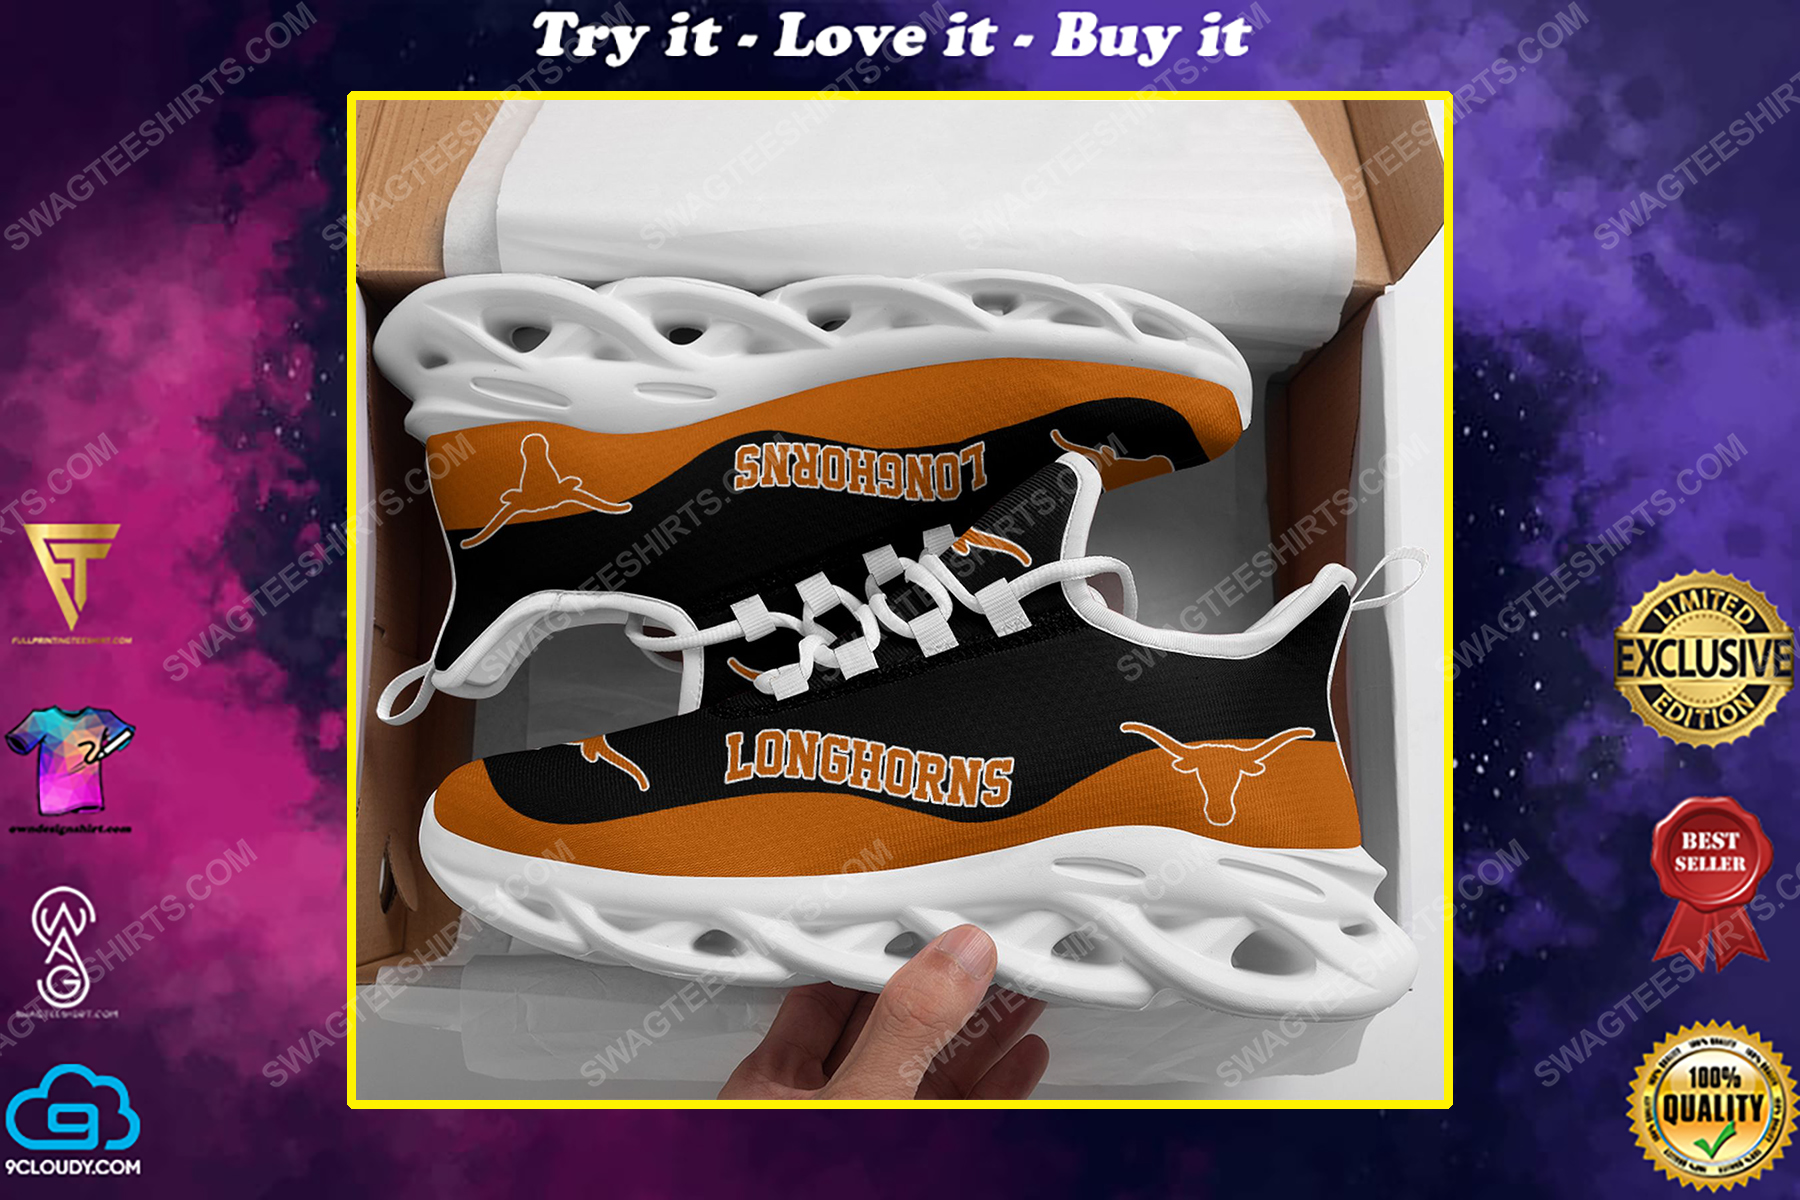 The texas longhorns football team max soul shoes